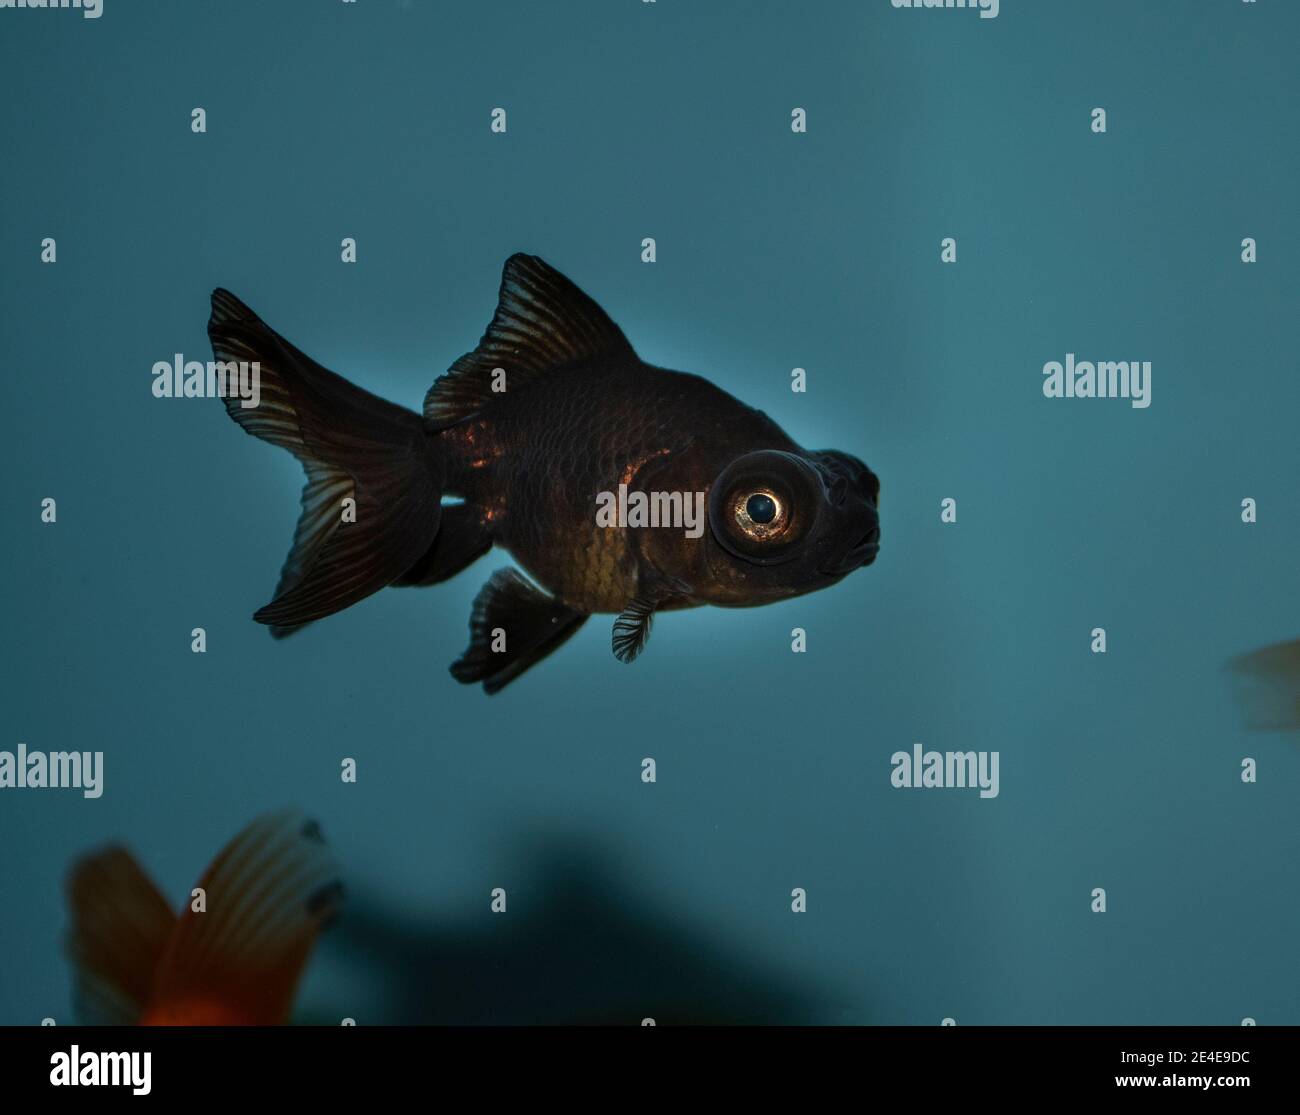 Telescope fish fotografías e imágenes de alta resolución - Alamy